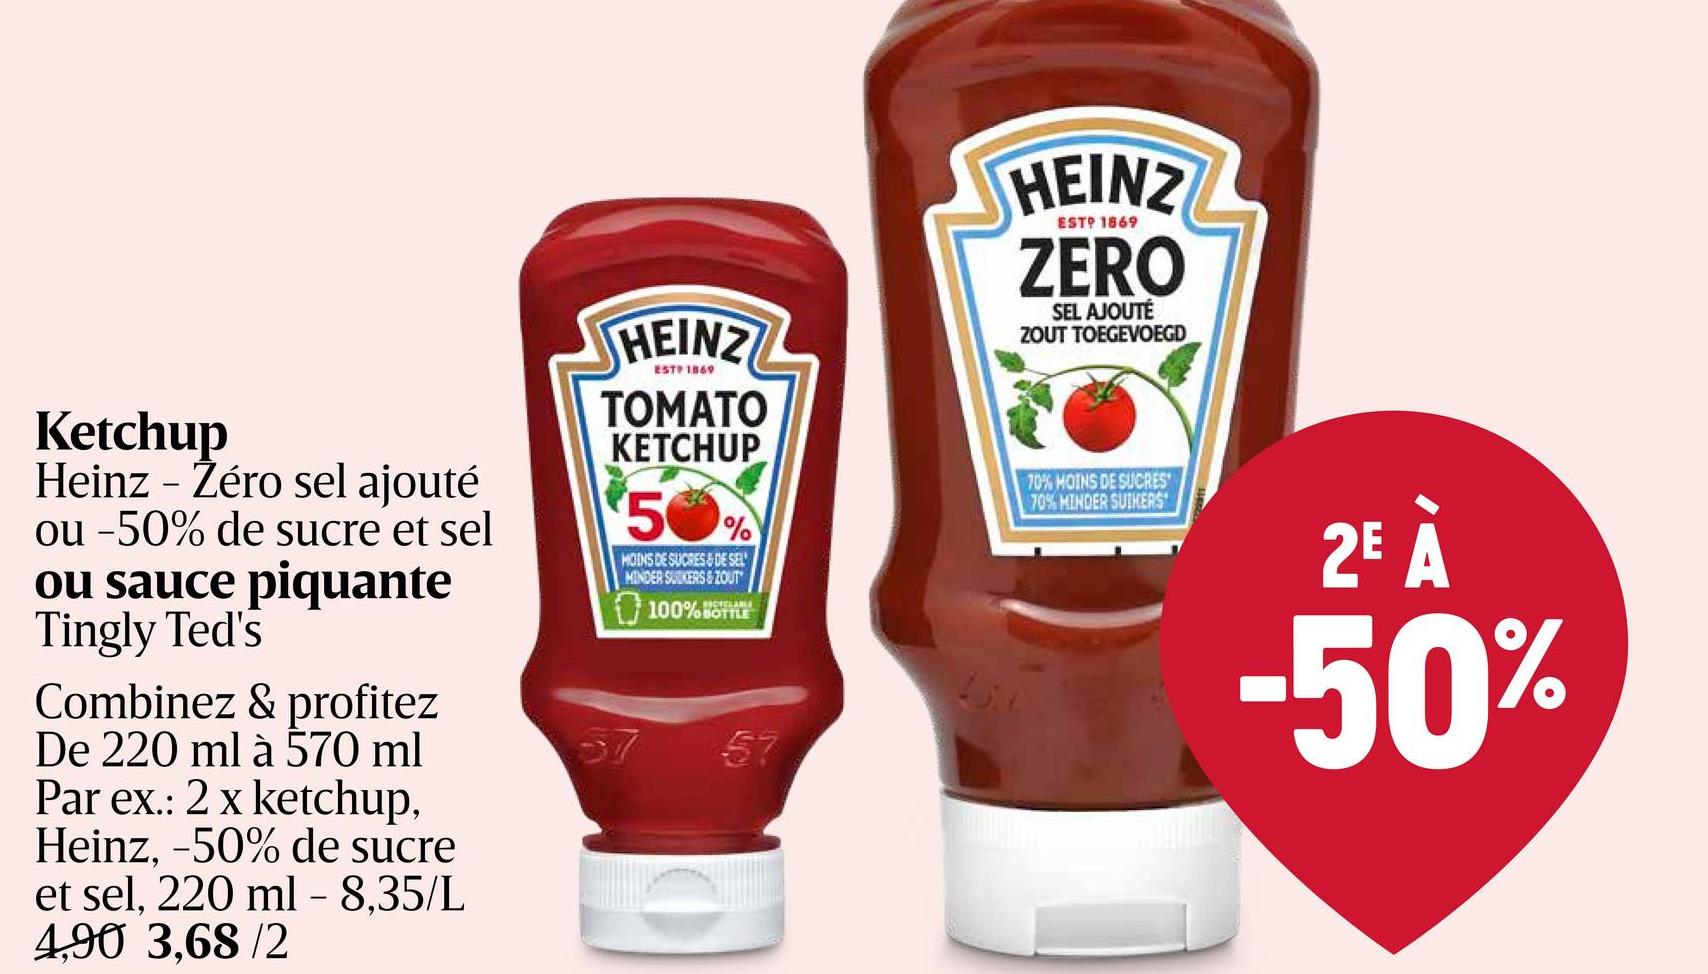 Ketchup | Tomates | -50% sucre et sel Heinz Tomato Ketchup 50% moins de sucres & 50% moins de sel